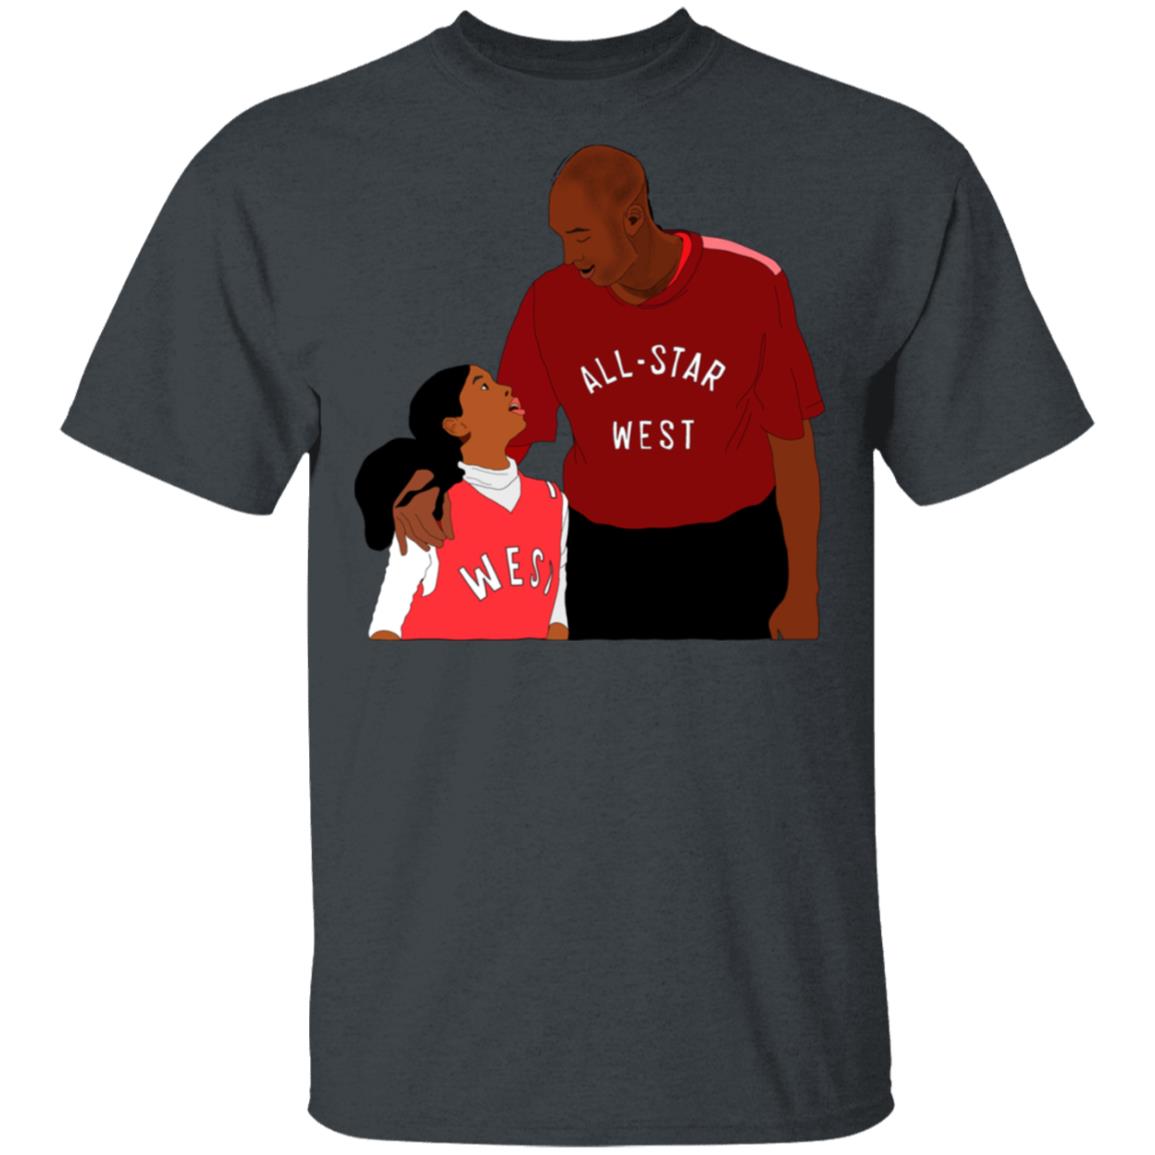 RIP Kobe Bryant and Gianna (Gigi) T-shirt